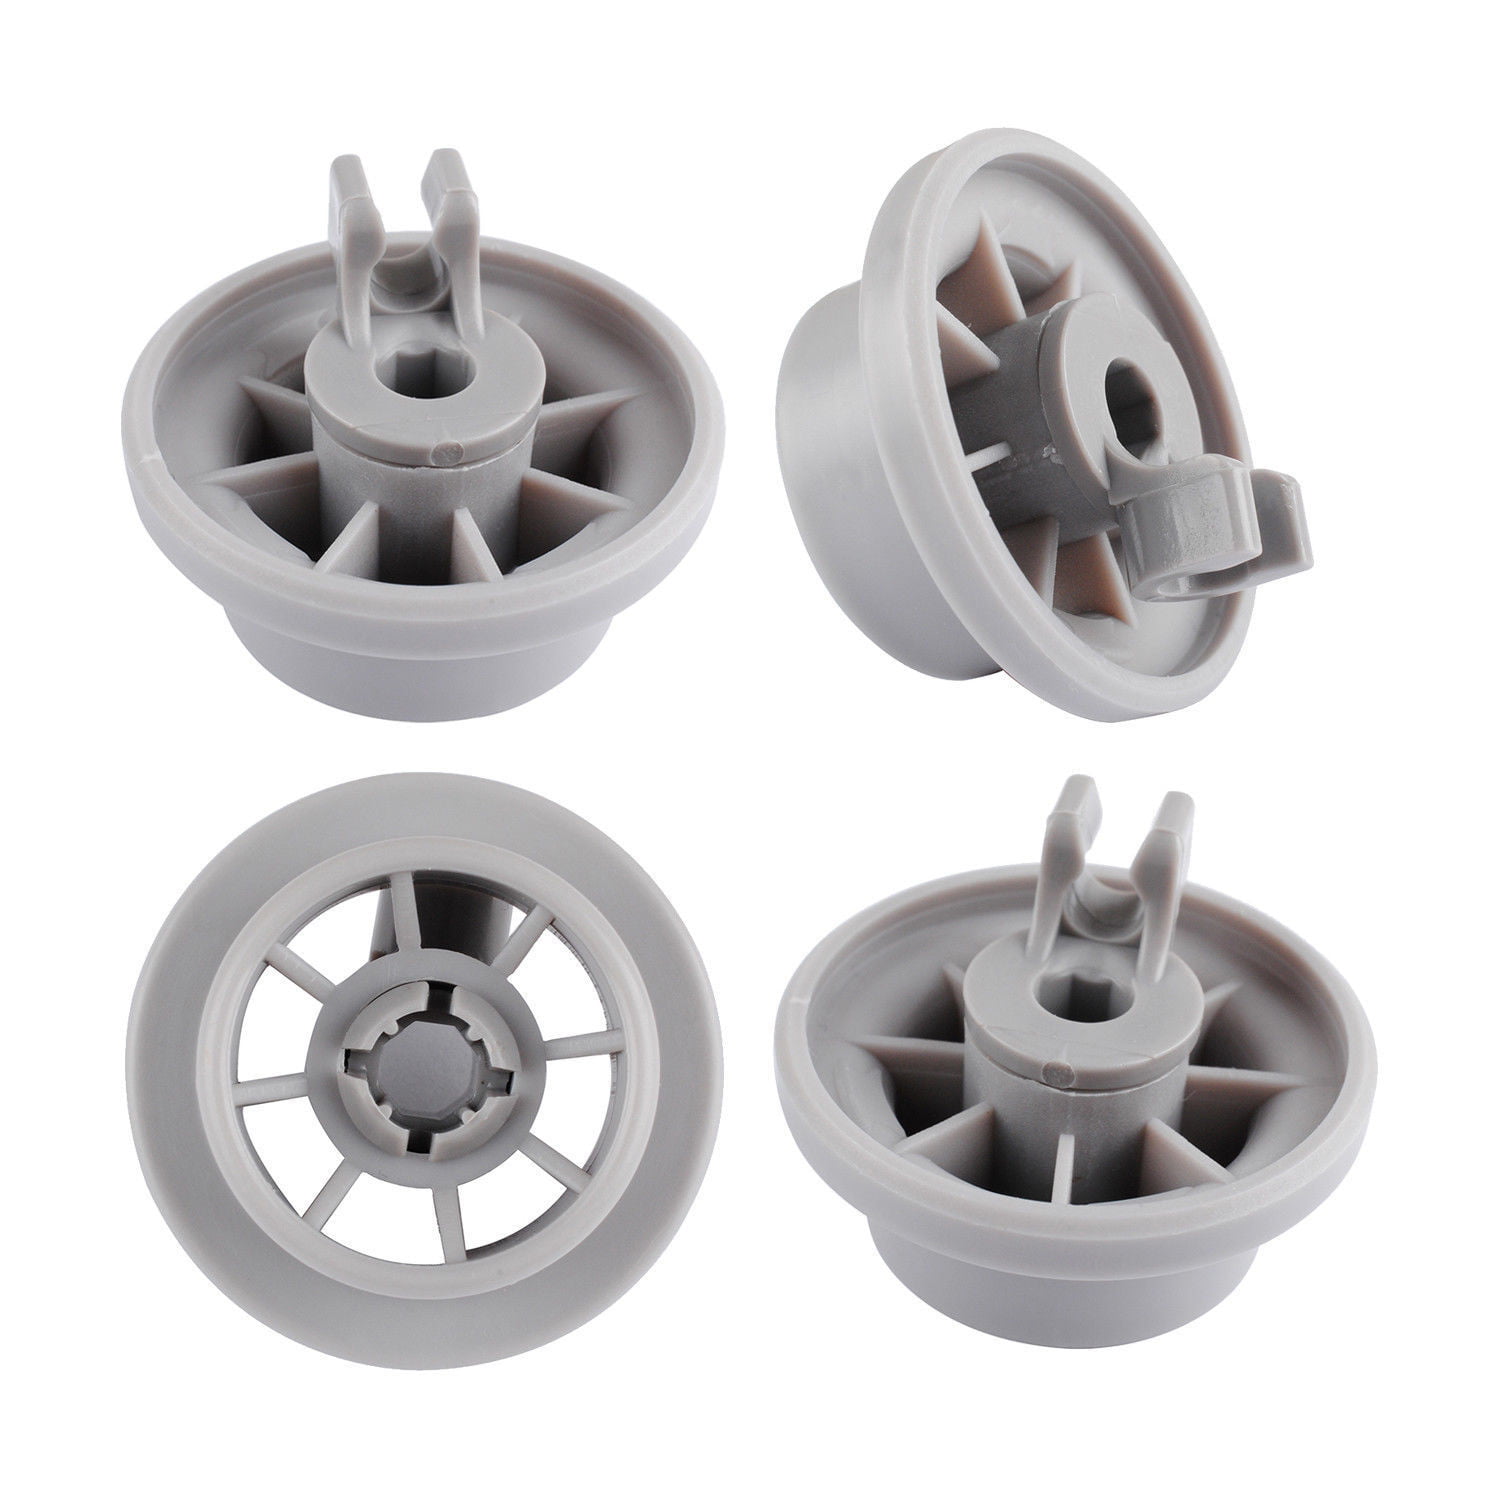 BOSCH NEFF Dishwasher Wheel UPPER BASKET WHEELS x 2 